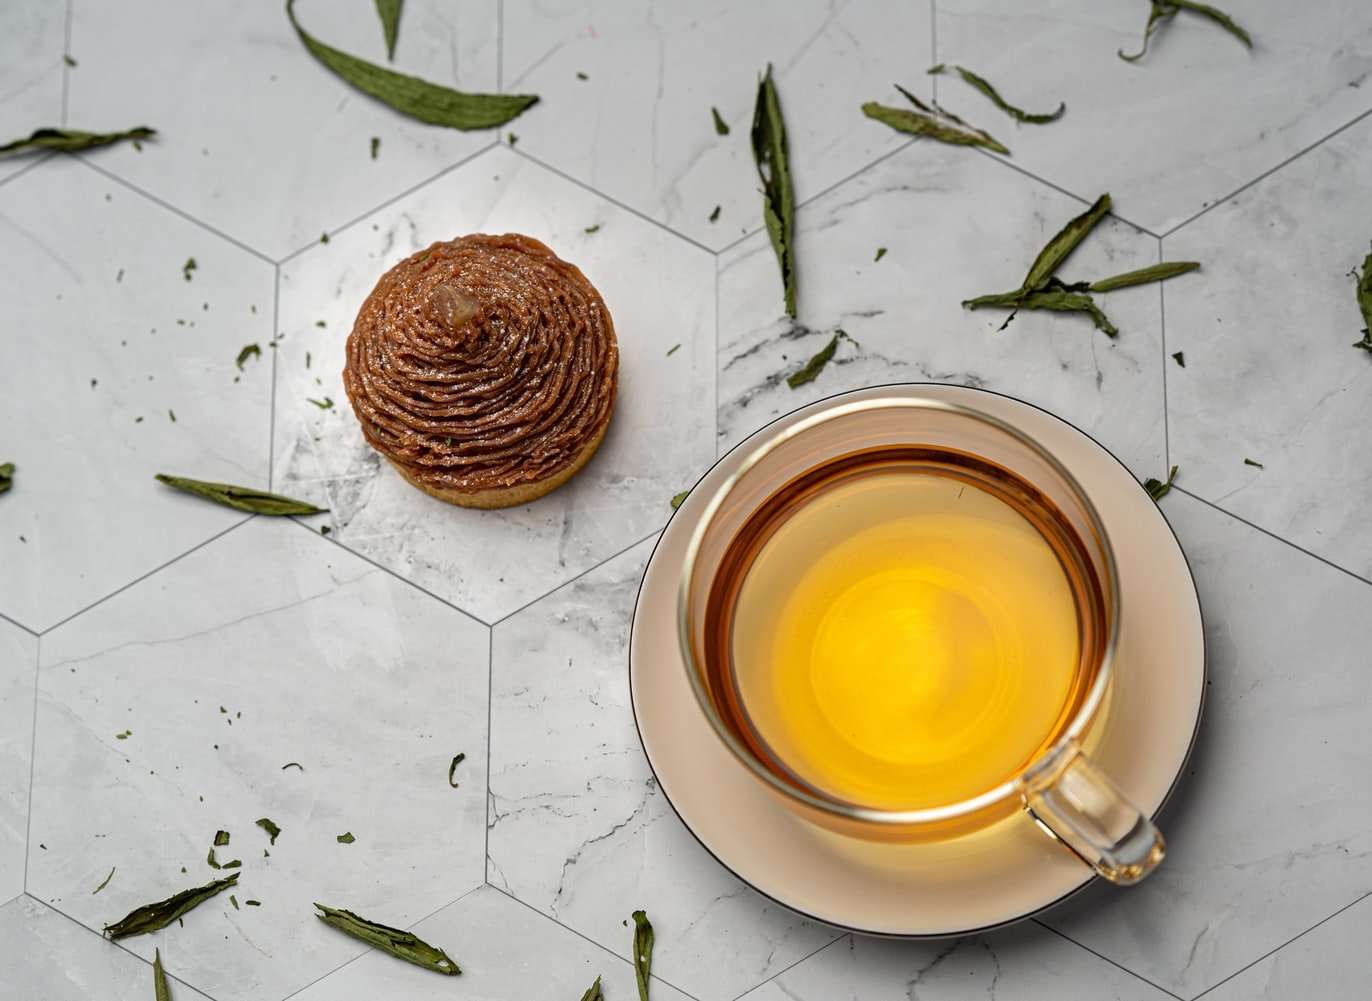 Is green tea good for acid reflux